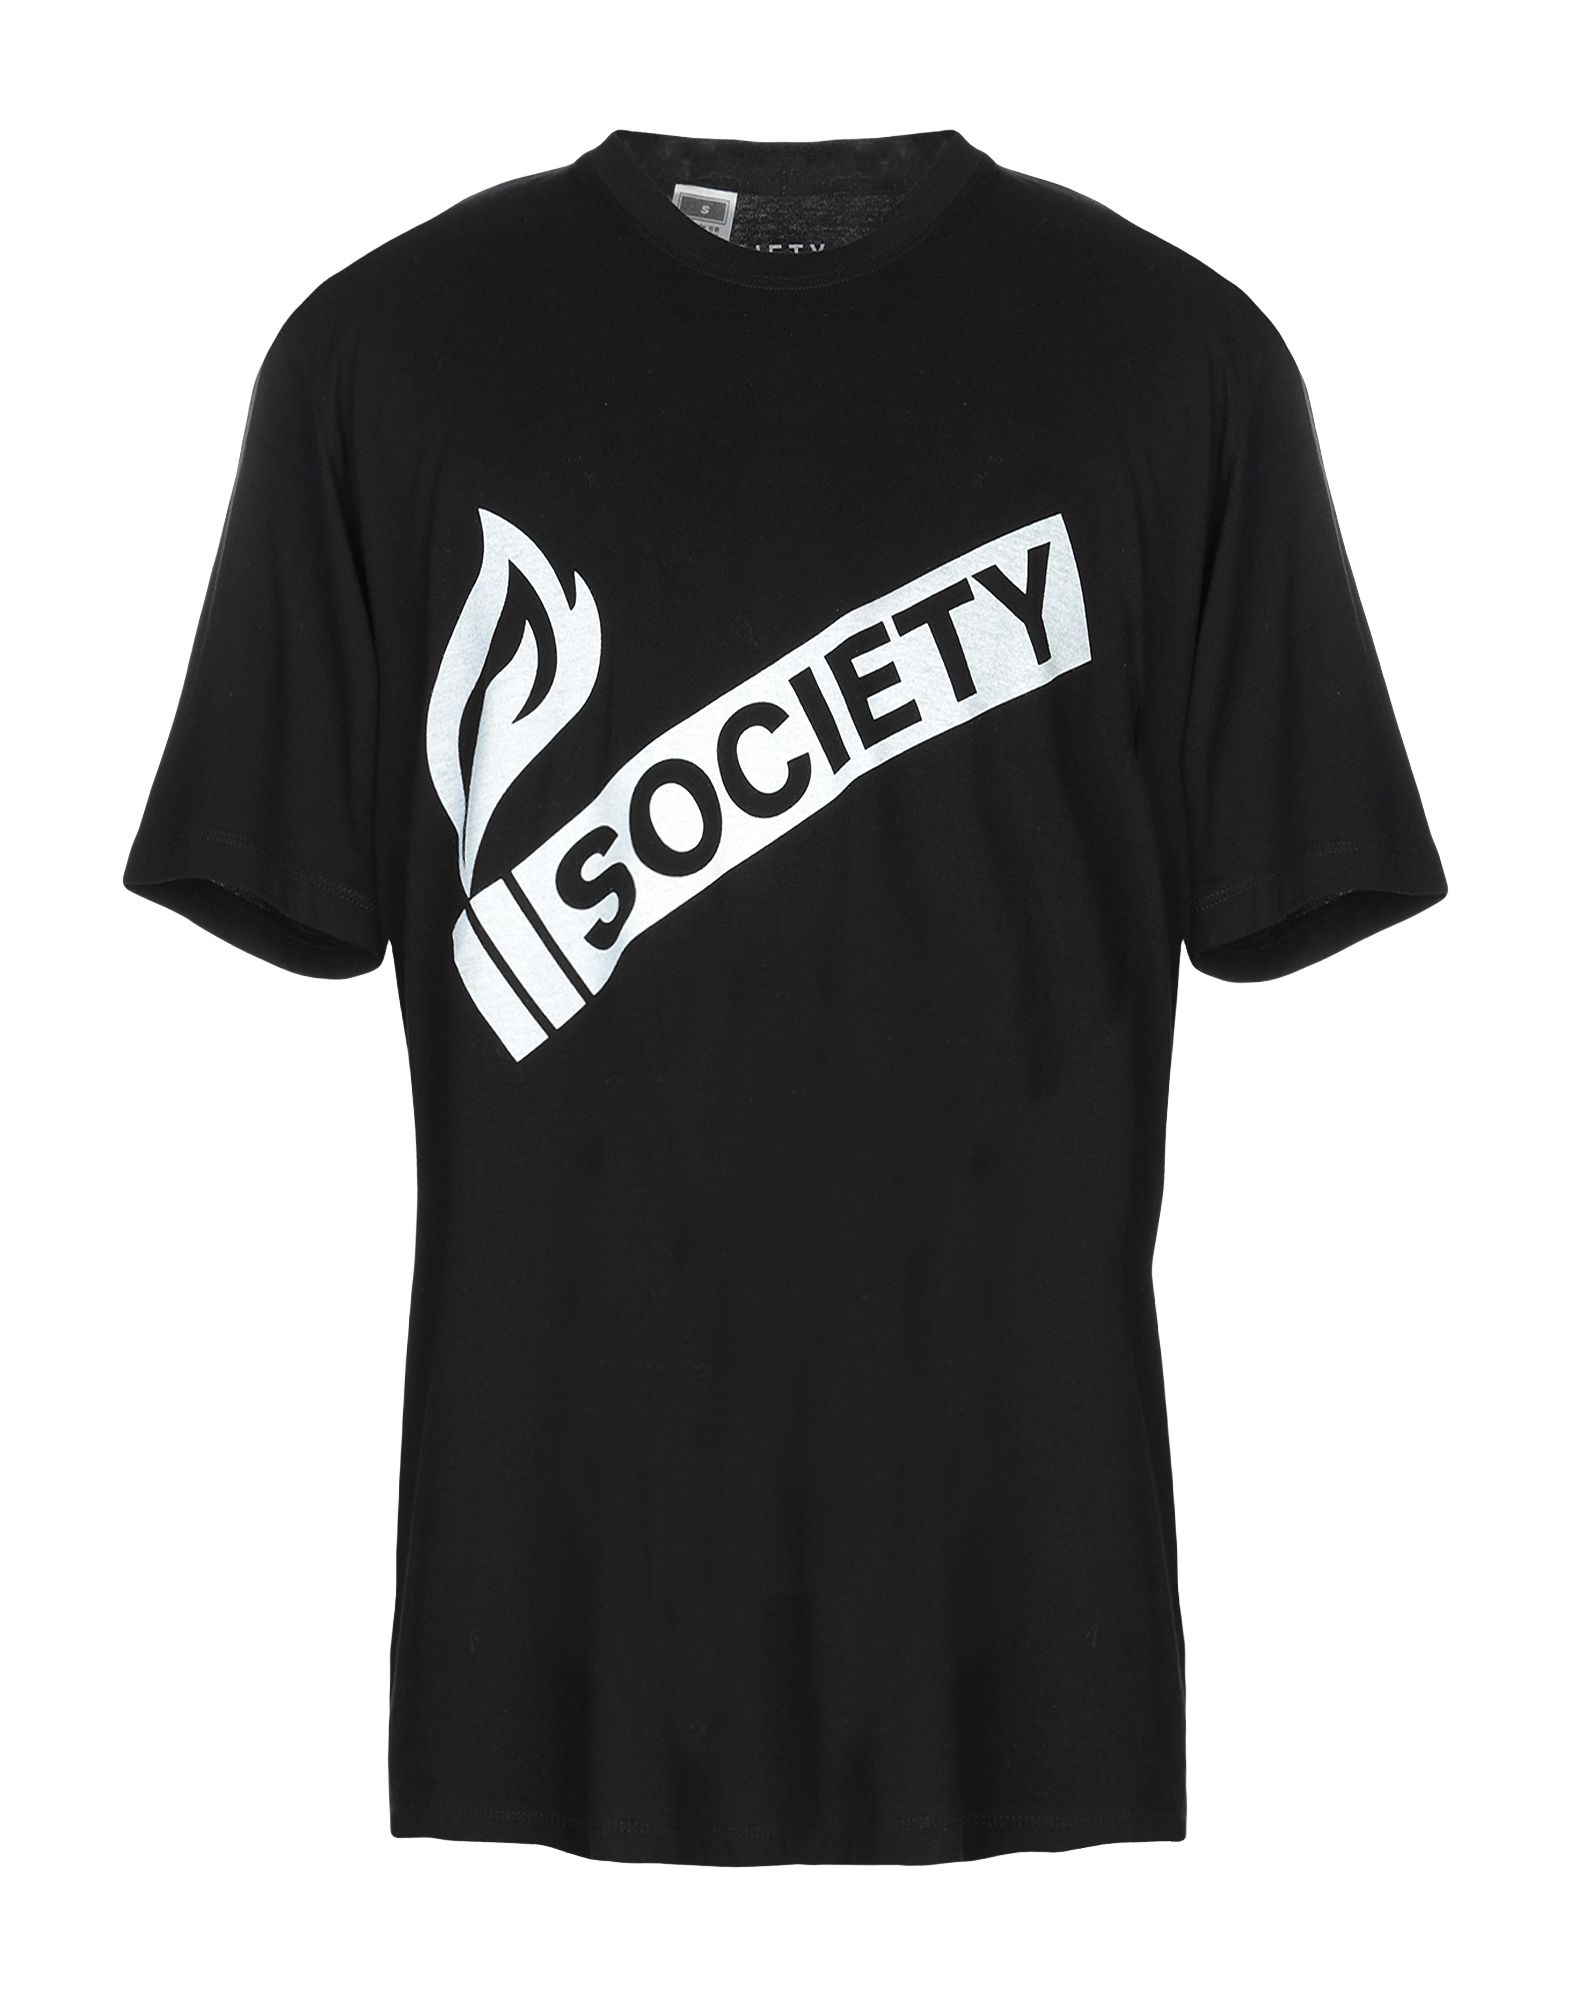 Society купить. Kaotiko Society футболка. Manto peaceful violence Society футболка. SWE одежда. Society бренд одежды.